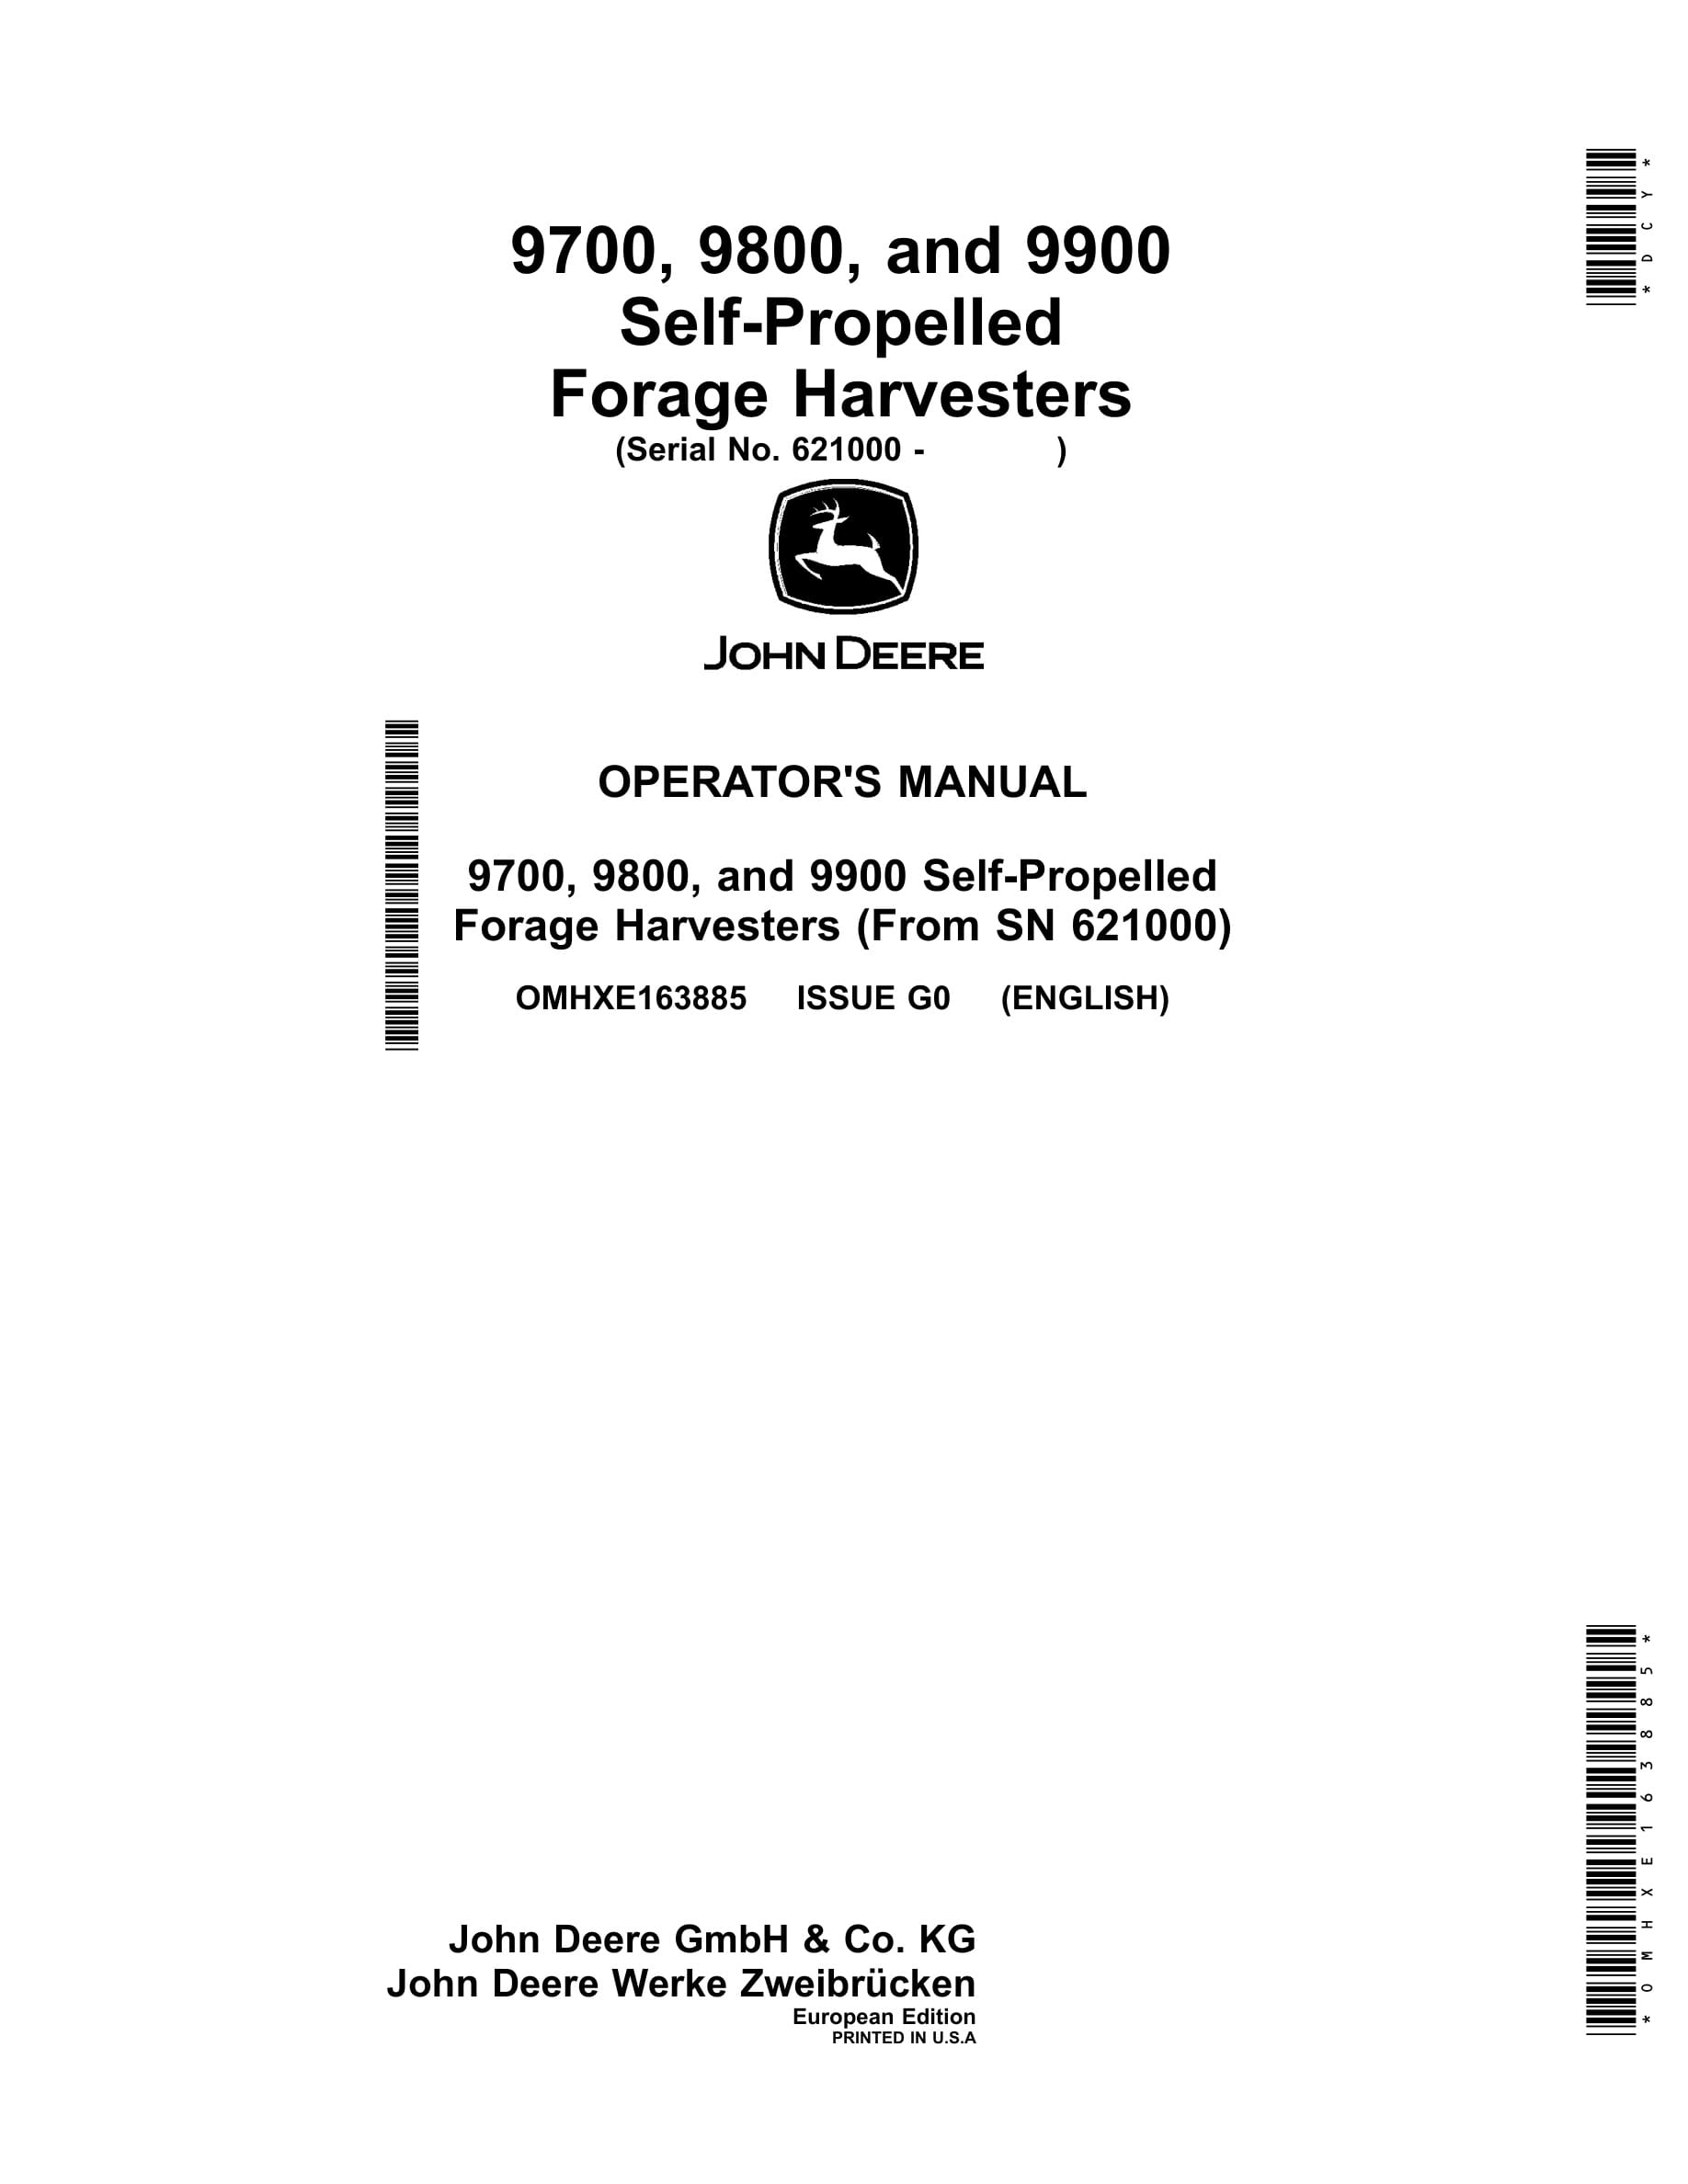 John Deere 9700, 9800, and 9900 Self-Propelled Forage Harvester Operator Manual OMHXE163885-1